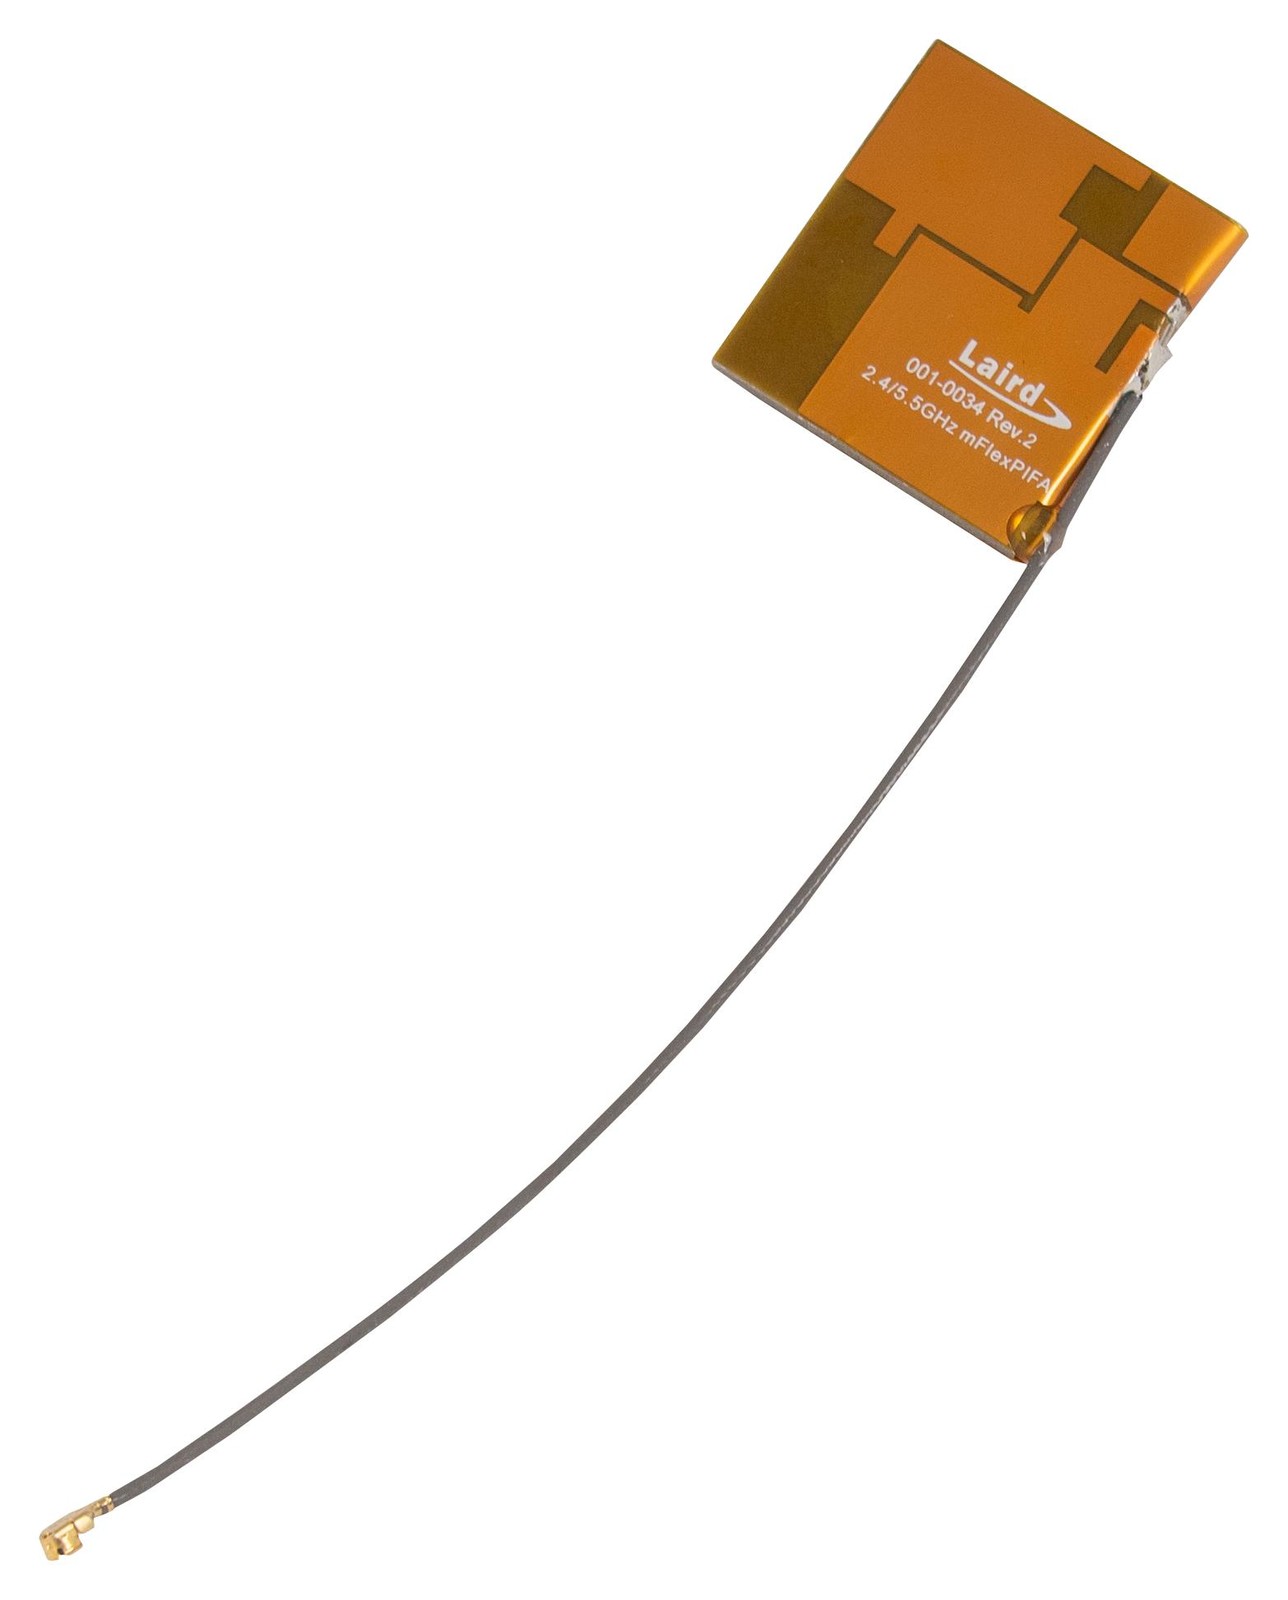 Laird Connectivity 001-0034 Mflexpifa 2.4 To 2.5Ghz Embedded Antenna